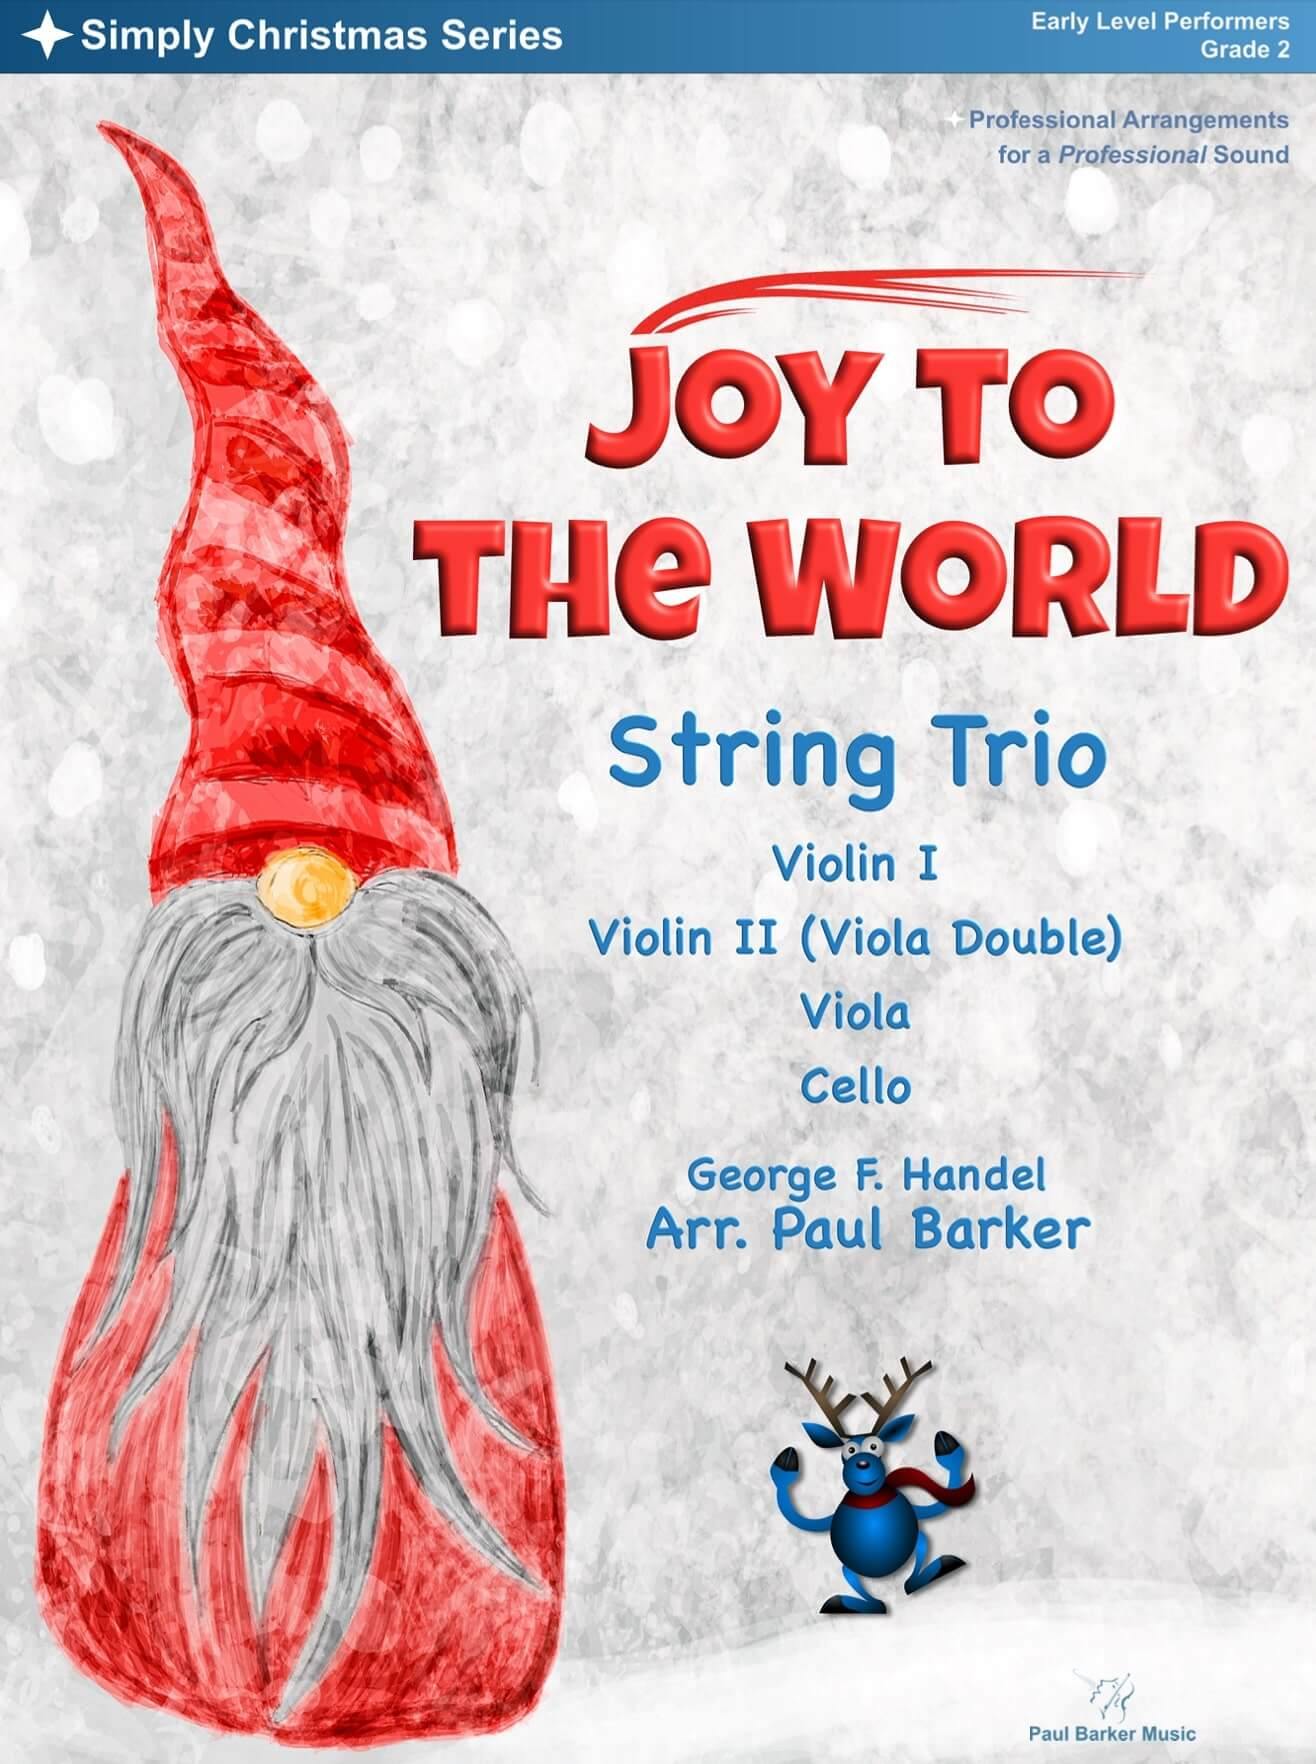 Joy To The World (String Trio) - Paul Barker Music 